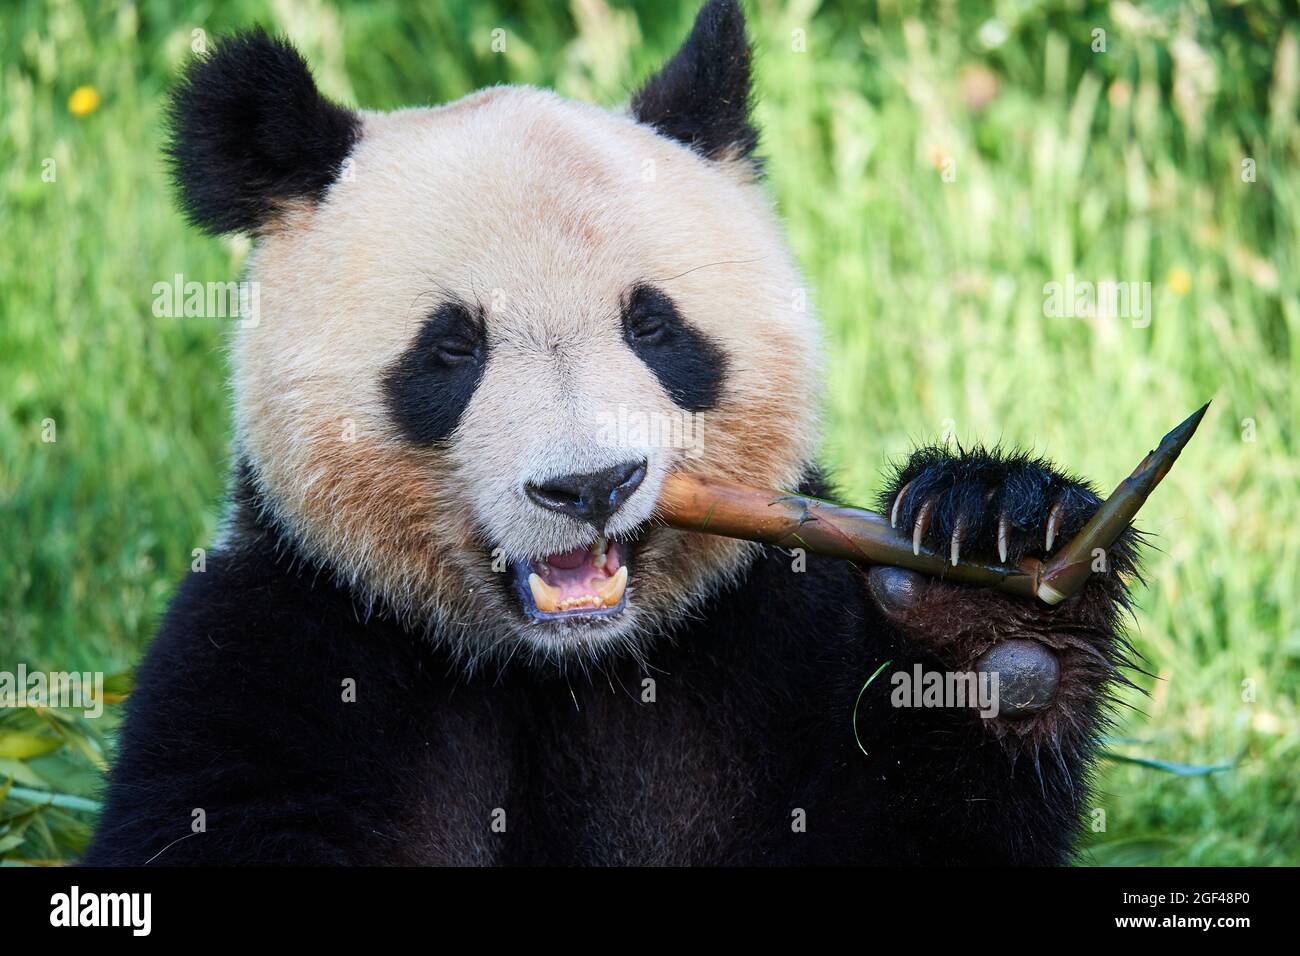 Panda gigante macho comiendo bambú (Ailuropoda melanoleuca) cautivo, Zoopark Beauval, Francia. Foto de stock